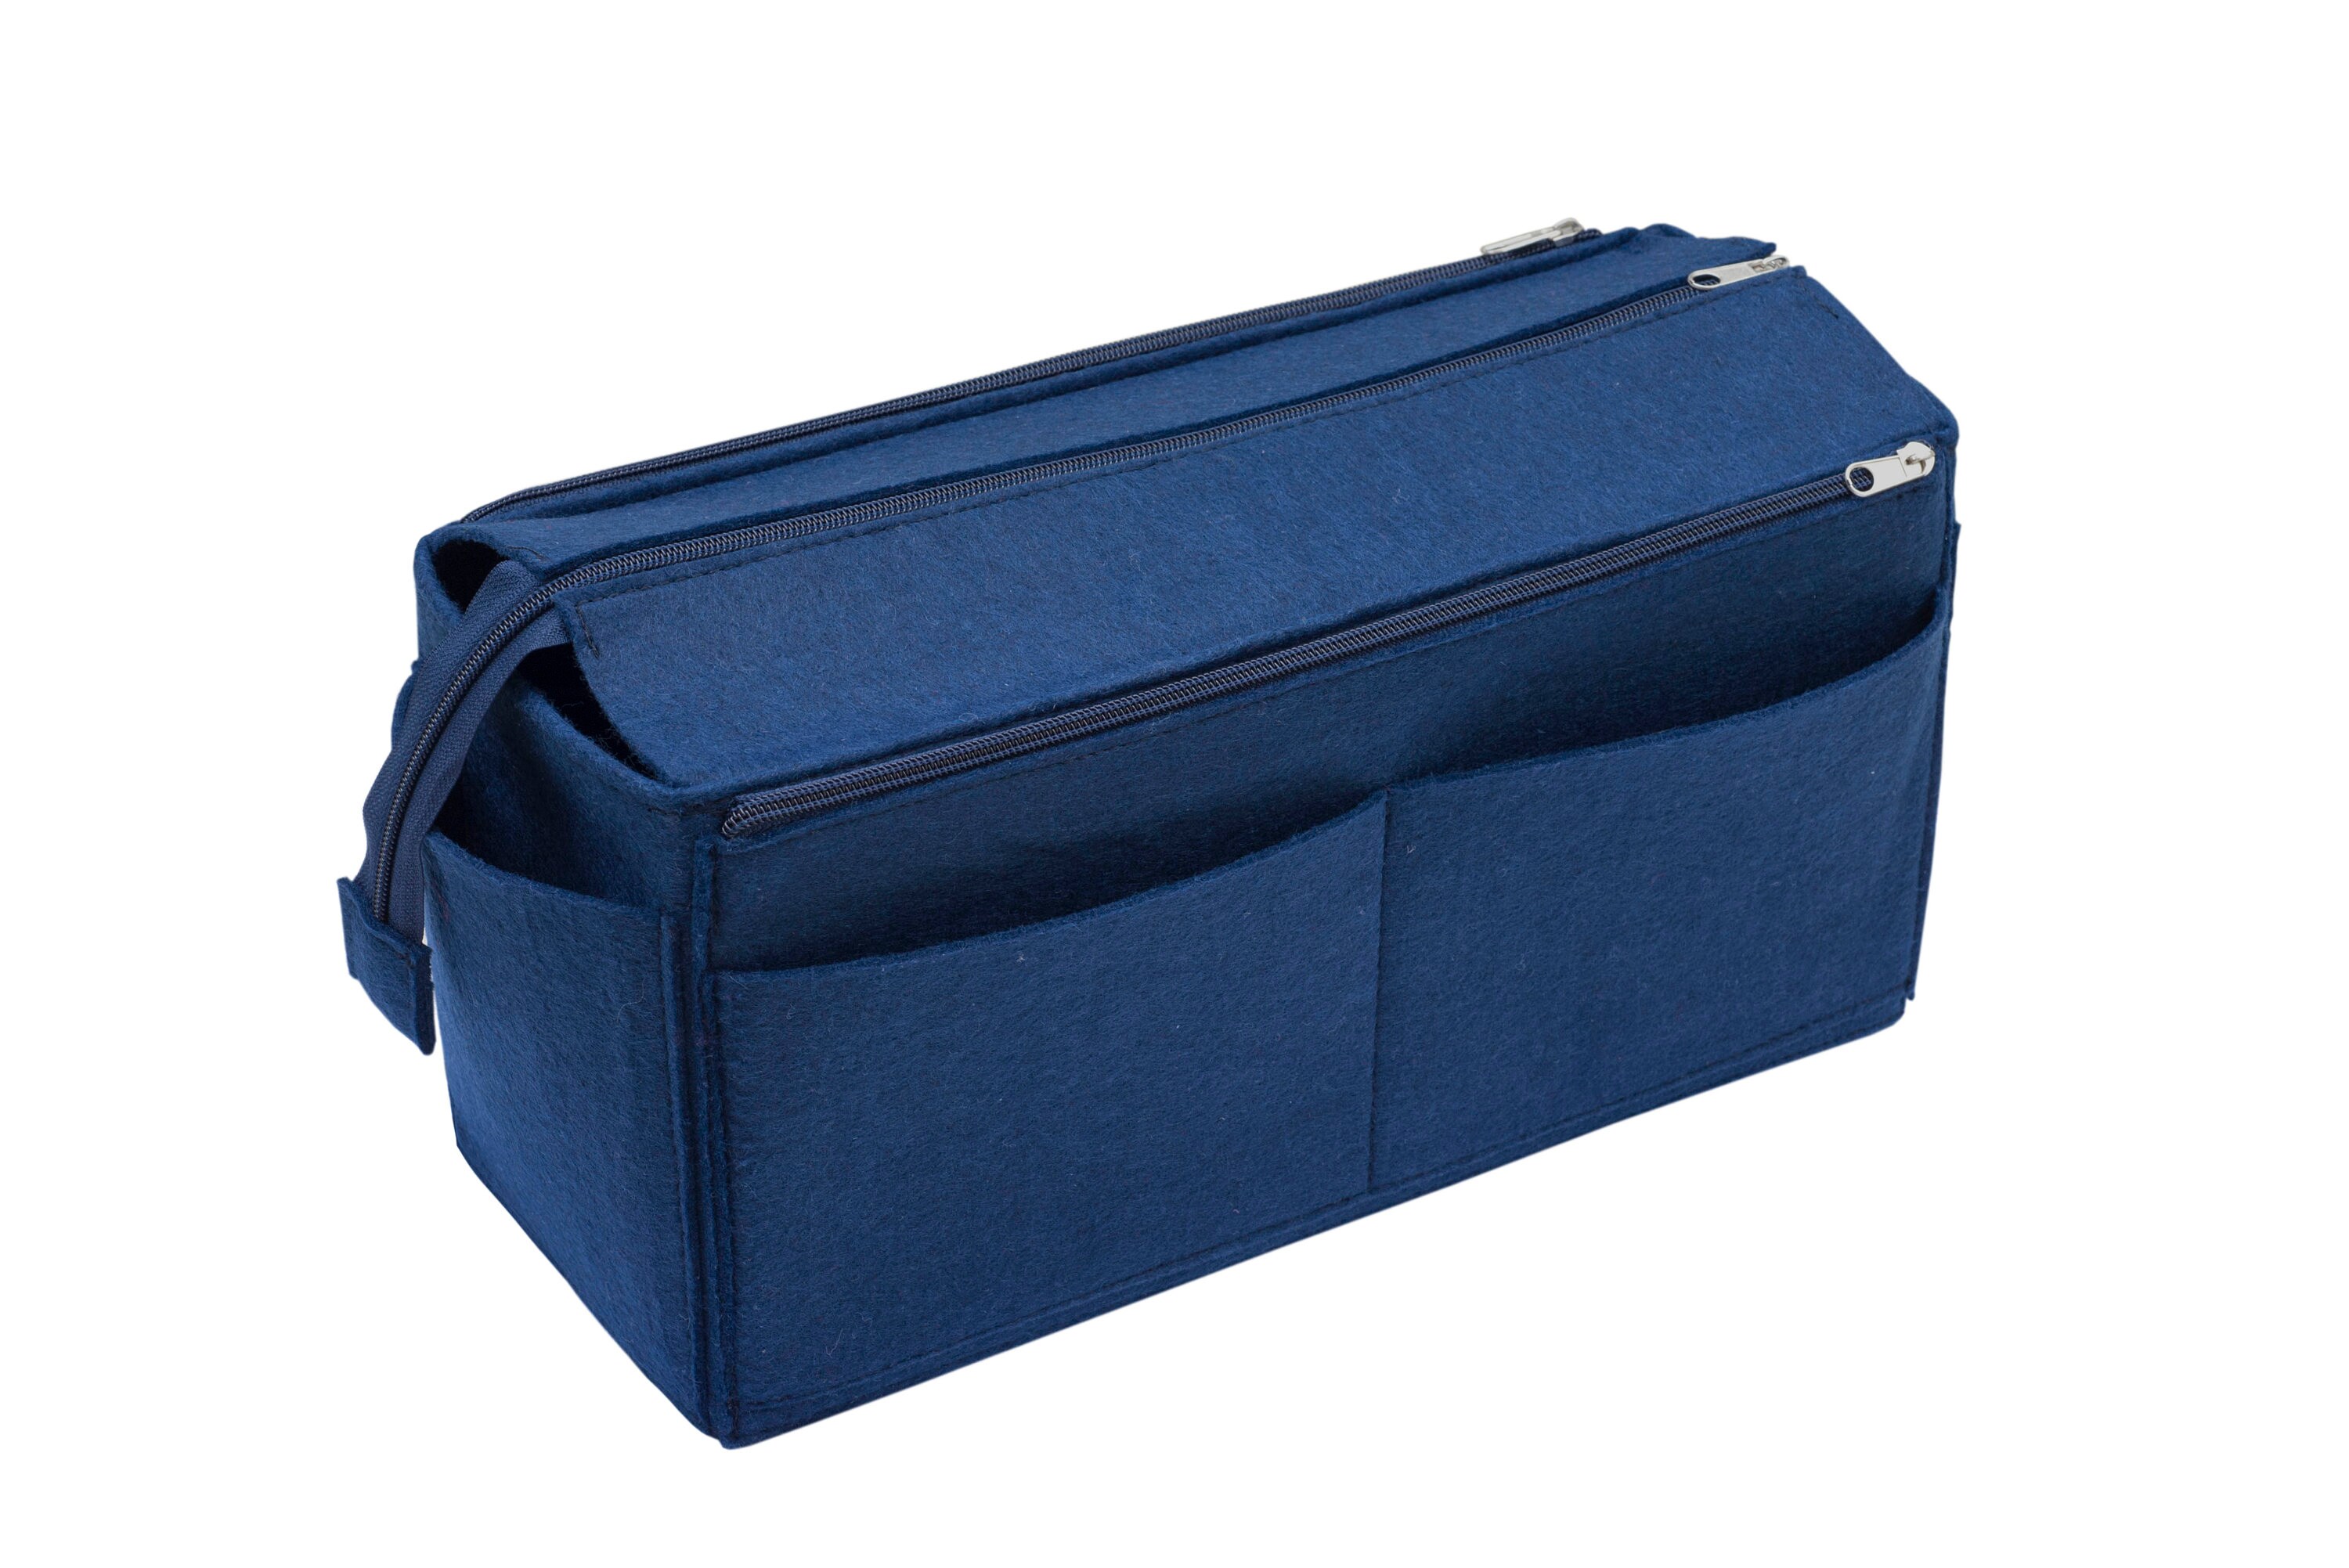 Customizable Felt Tote Bag Organizer, Purse Insert (Invisible Handles, Zip Pocket, Key Chain Hook, Detachable Compartments)